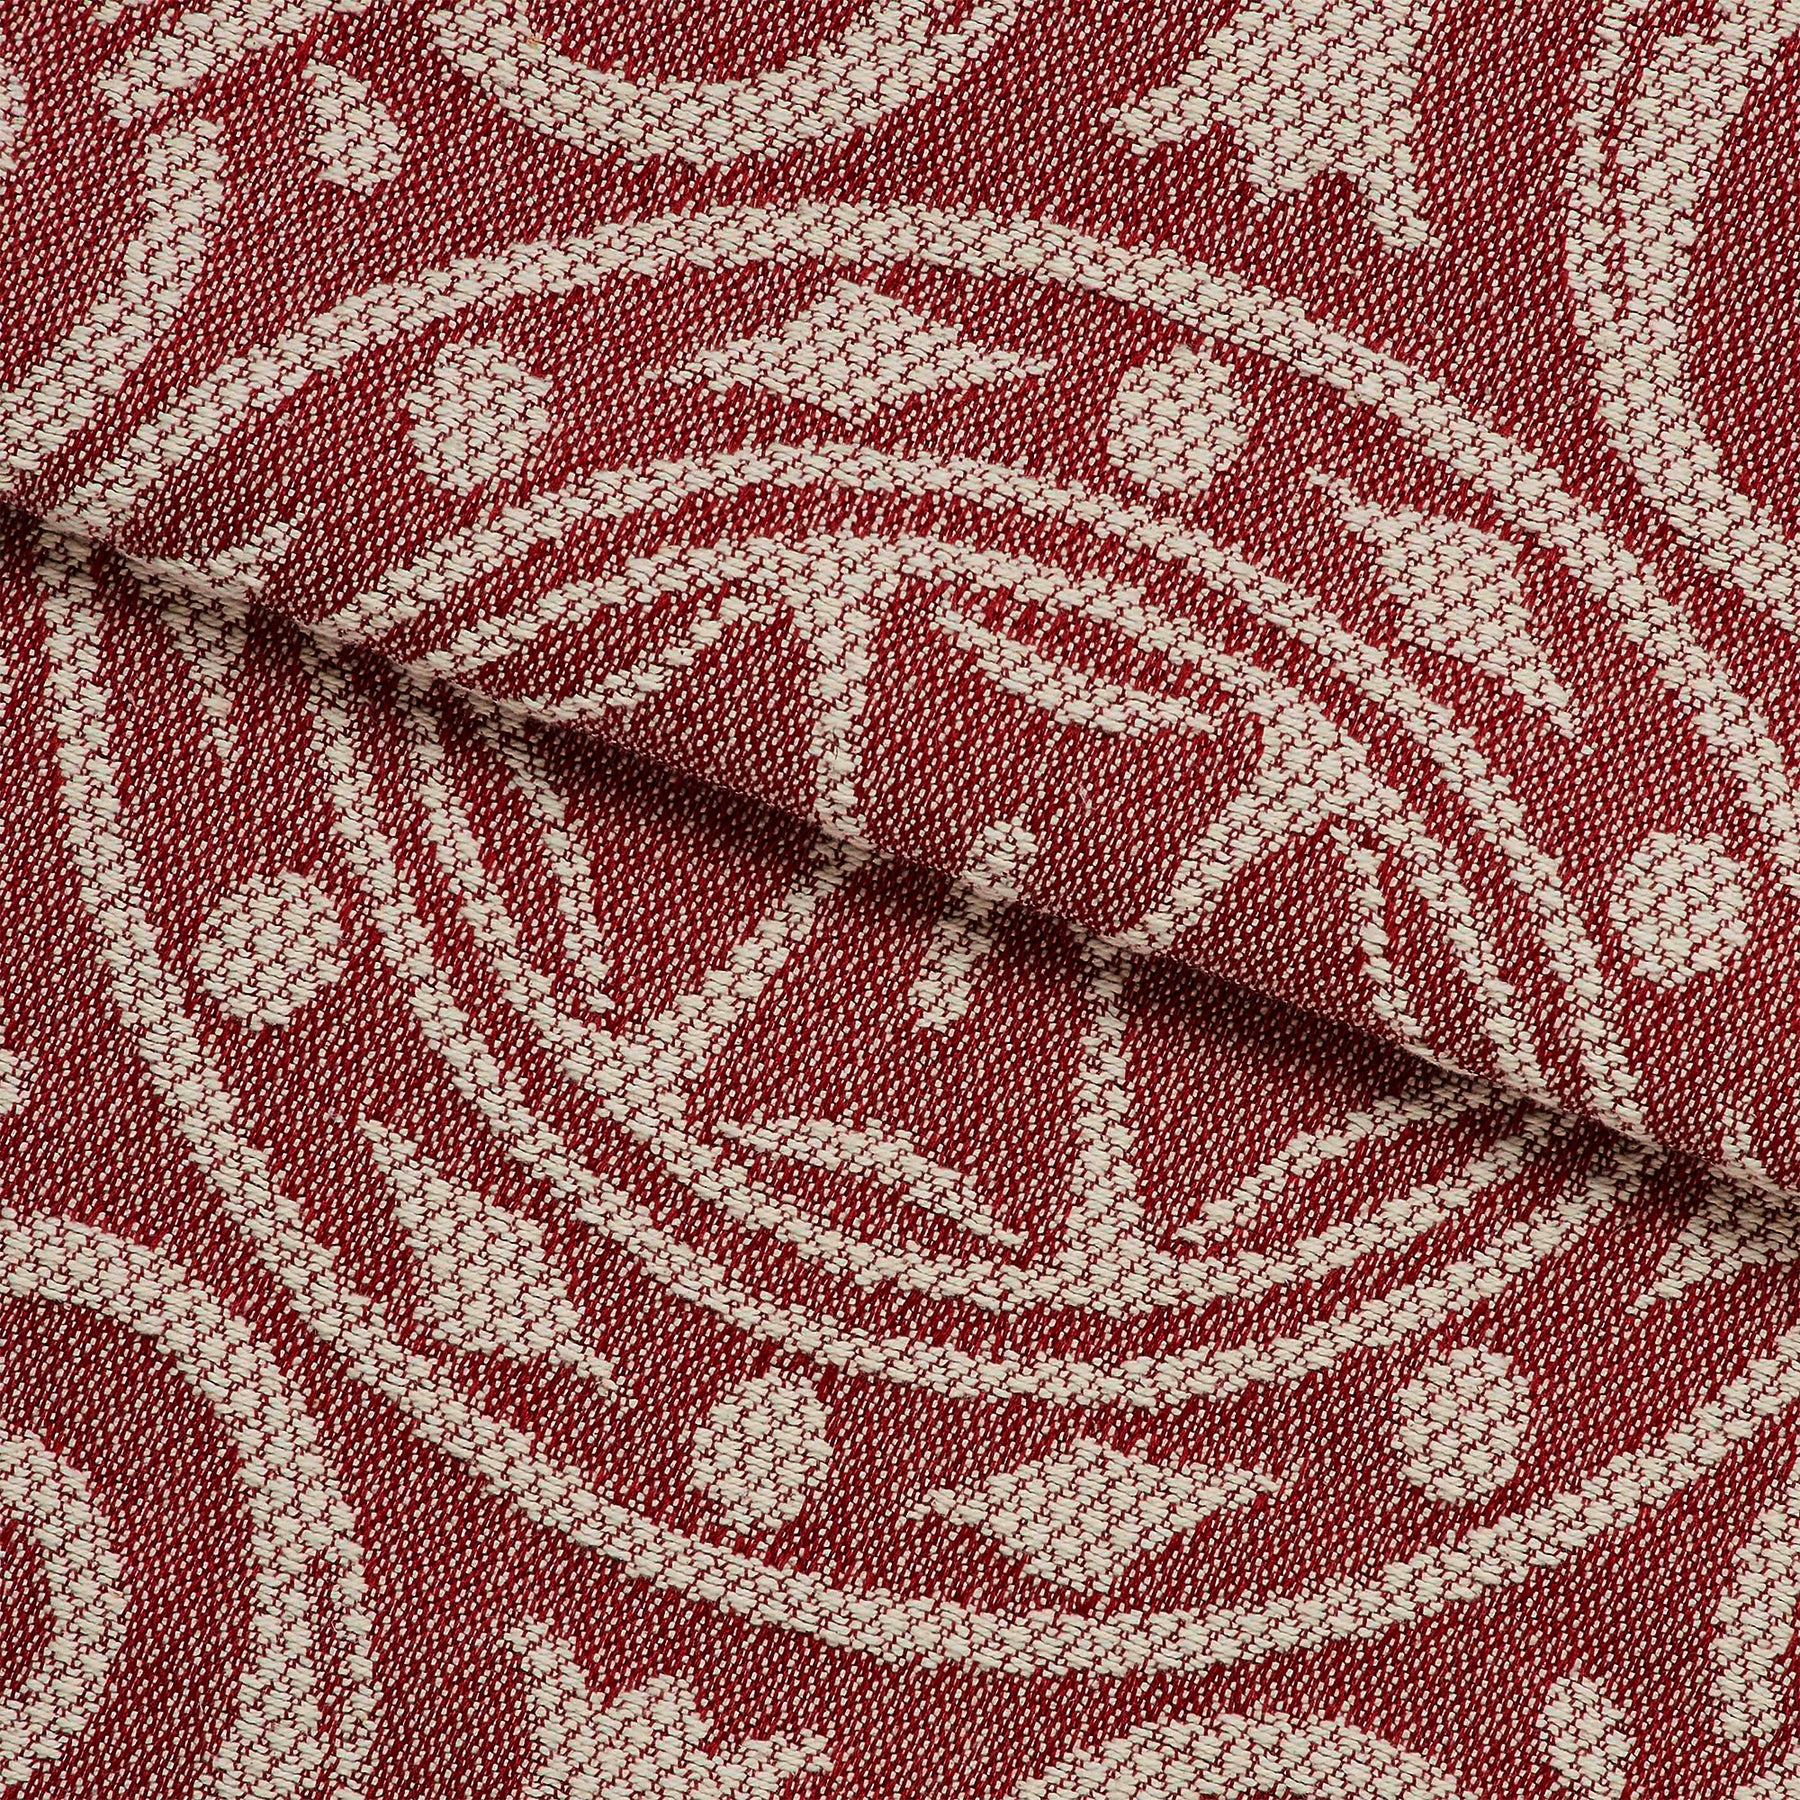 Superior Adalie Cotton Blend Woven Jacquard Vintage Medallion Lightweight Bedspread and Sham Set - Berry Red